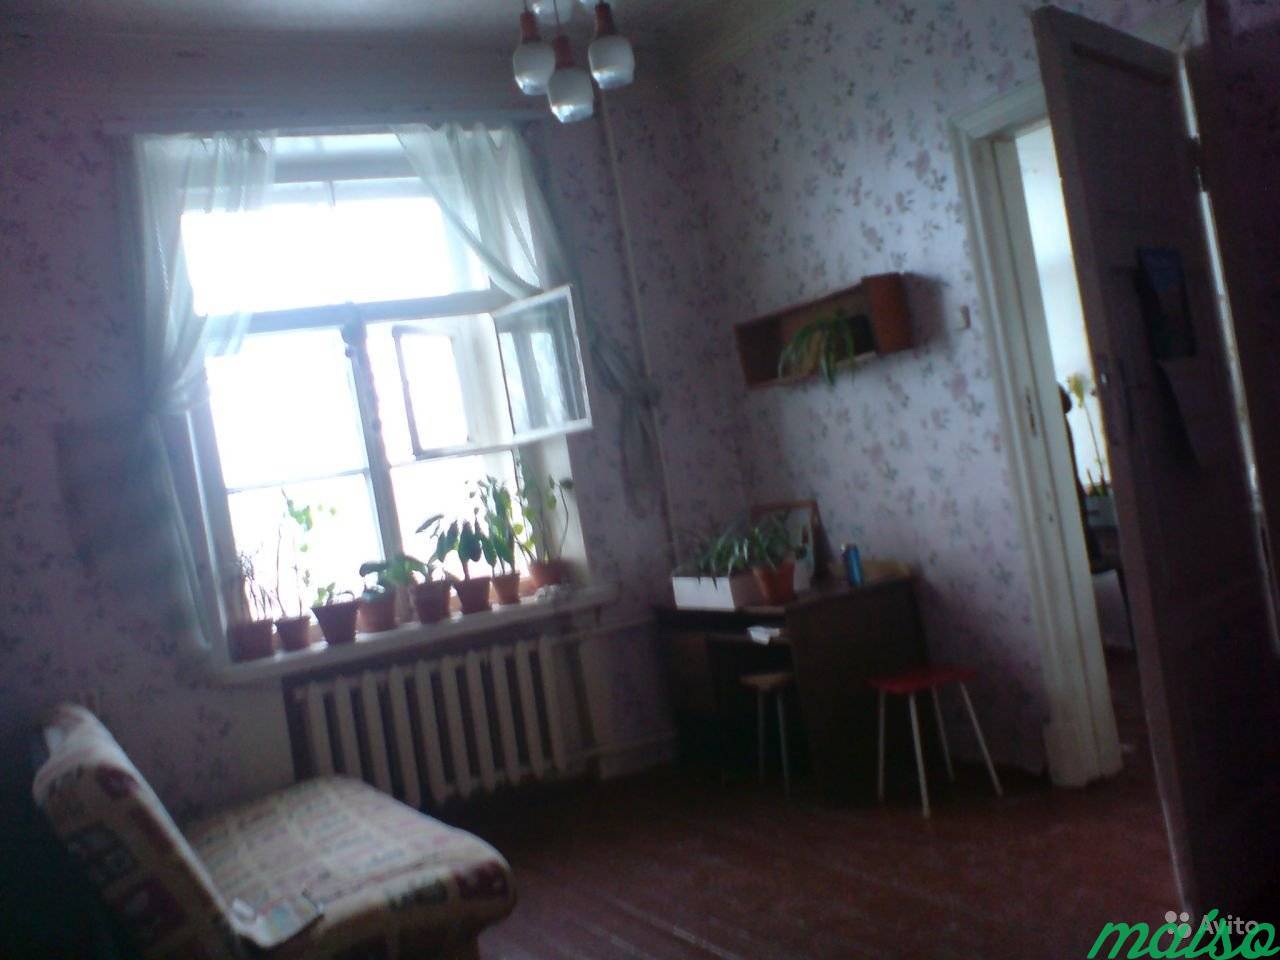 Комната 22 м² в 5-к, 4/4 эт. в Санкт-Петербурге. Фото 1